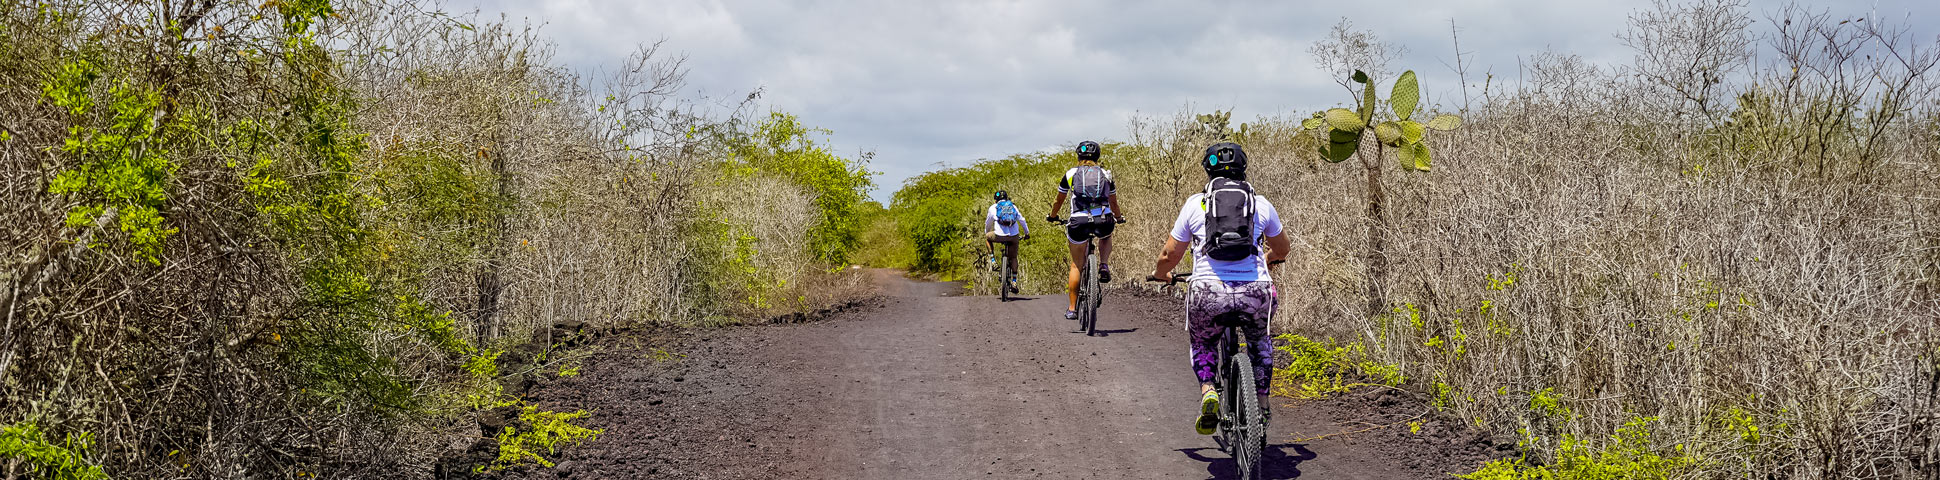 Biking the Galapagos Islands Tour